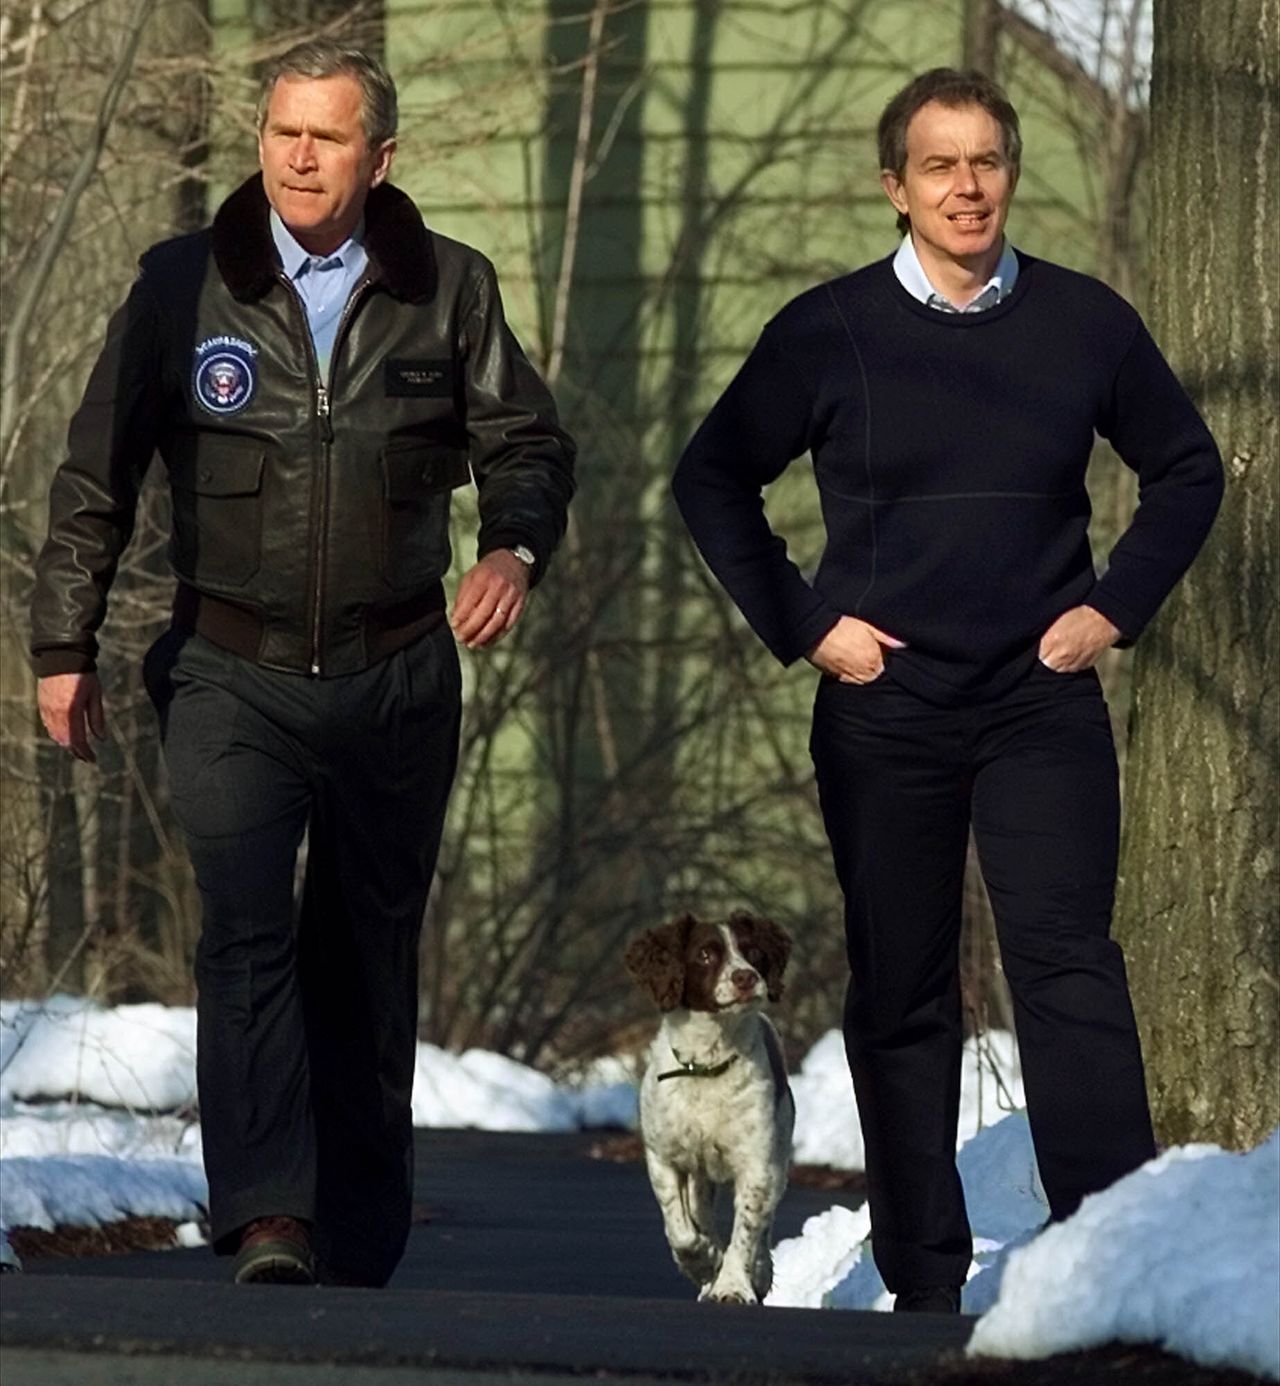 George W Bush and Tony Blair at Camp David in 2001.